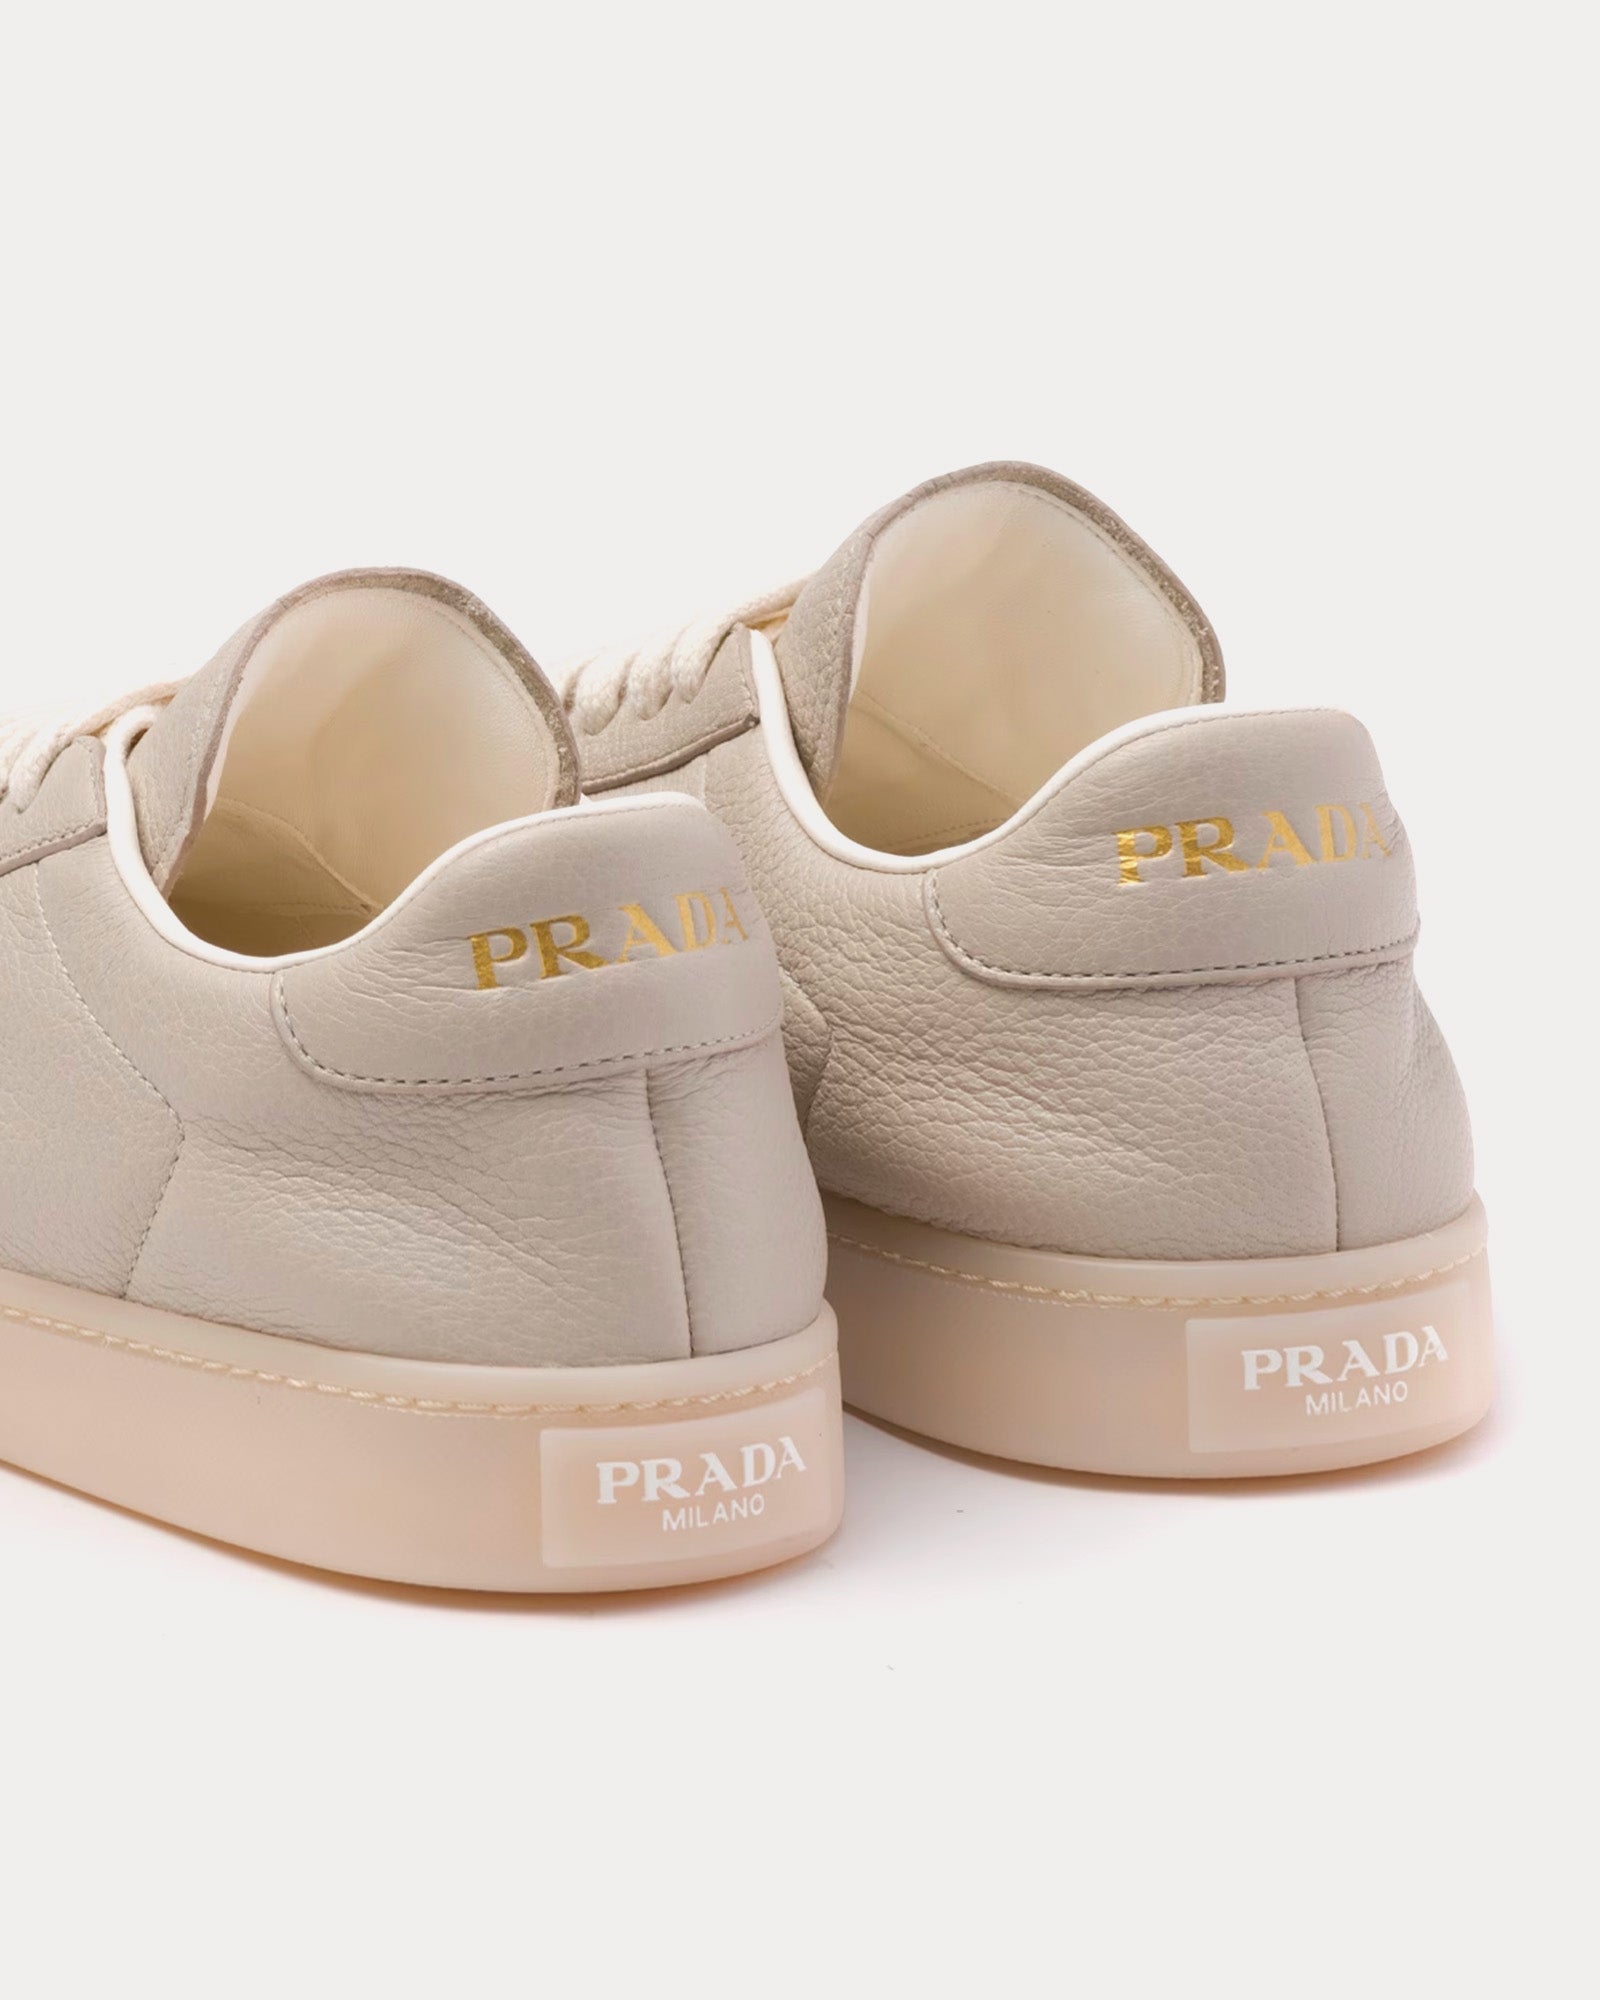 Prada - Leather Pumice Stone Low Top Sneakers